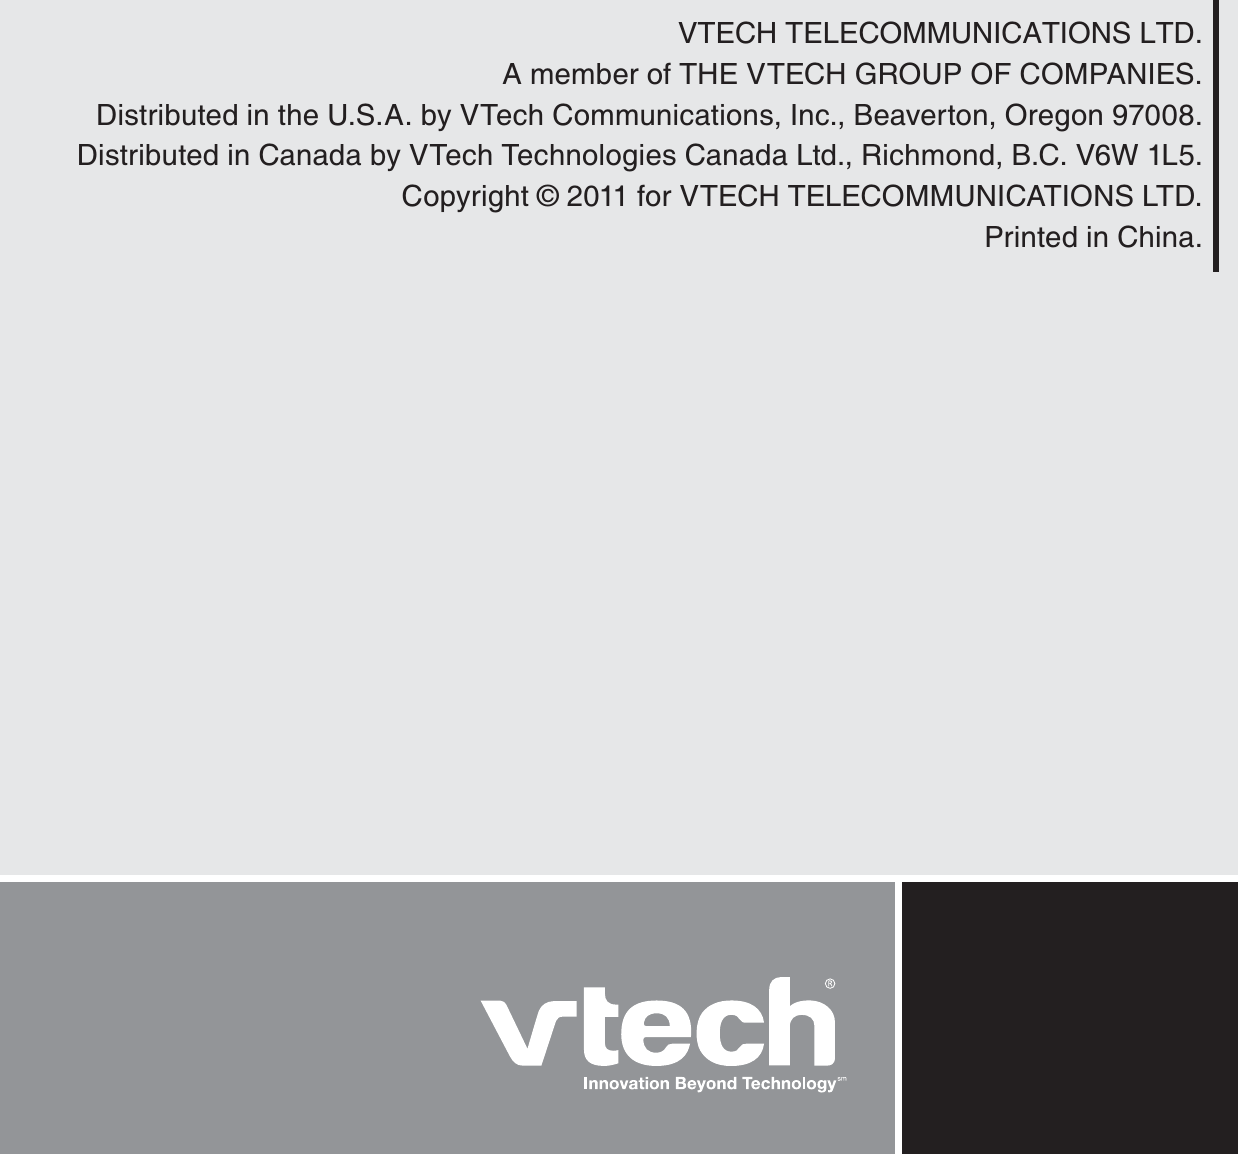 VTECH TELECOMMUNICATIONS LTD.A member of THE VTECH GROUP OF COMPANIES.Distributed in the U.S.A. by VTech Communications, Inc., Beaverton, Oregon 97008.Distributed in Canada by VTech Technologies Canada Ltd., Richmond, B.C. V6W 1L5.Copyright © 2011 for VTECH TELECOMMUNICATIONS LTD.Printed in China. 